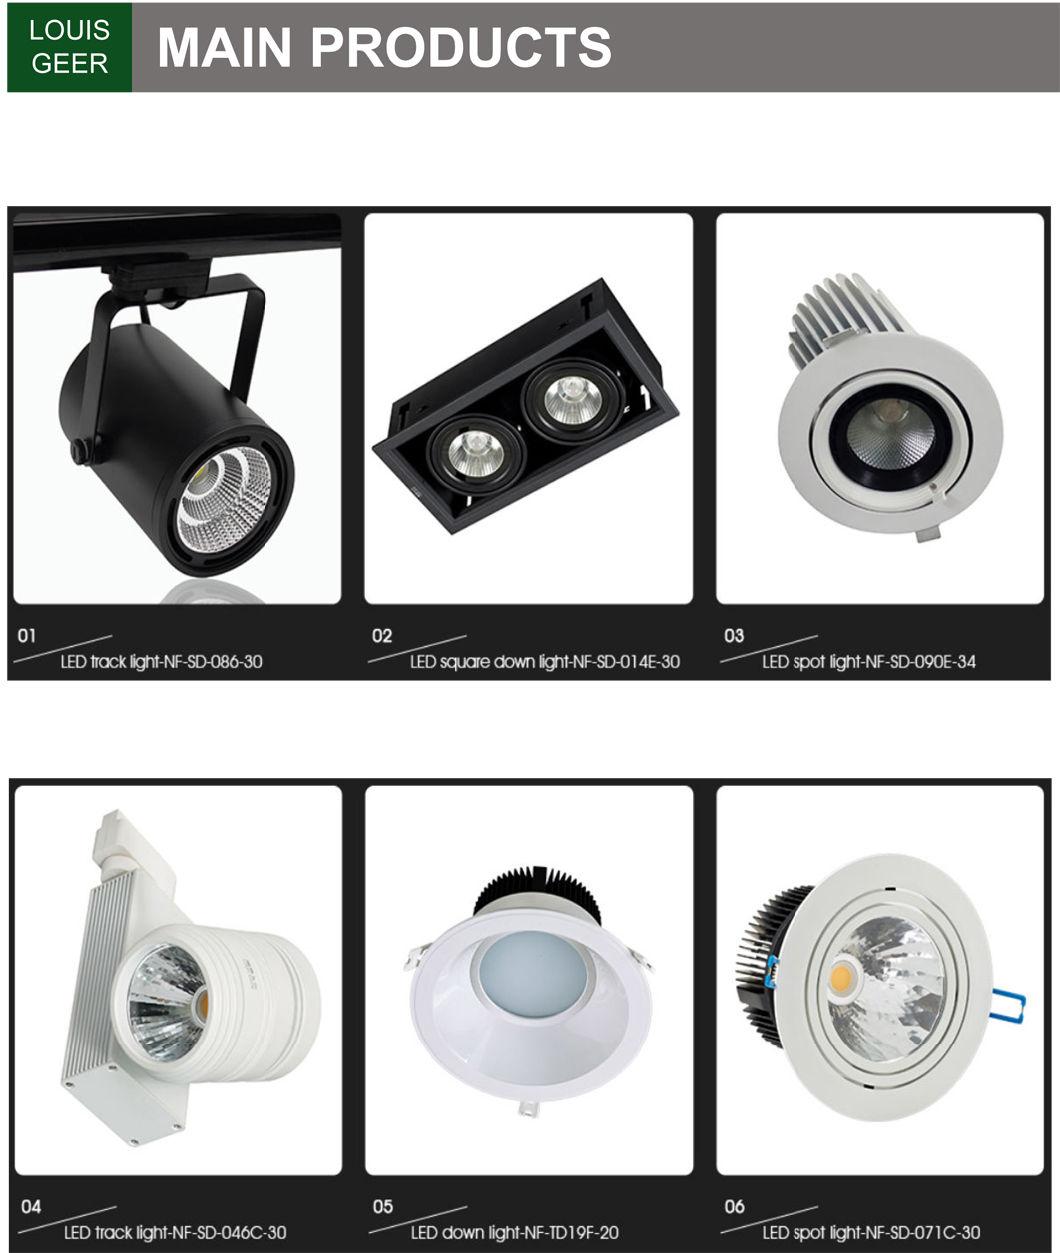 30W 3 Phase LED Track Light Europe Standard, White Finish, COB LED, Spot Light